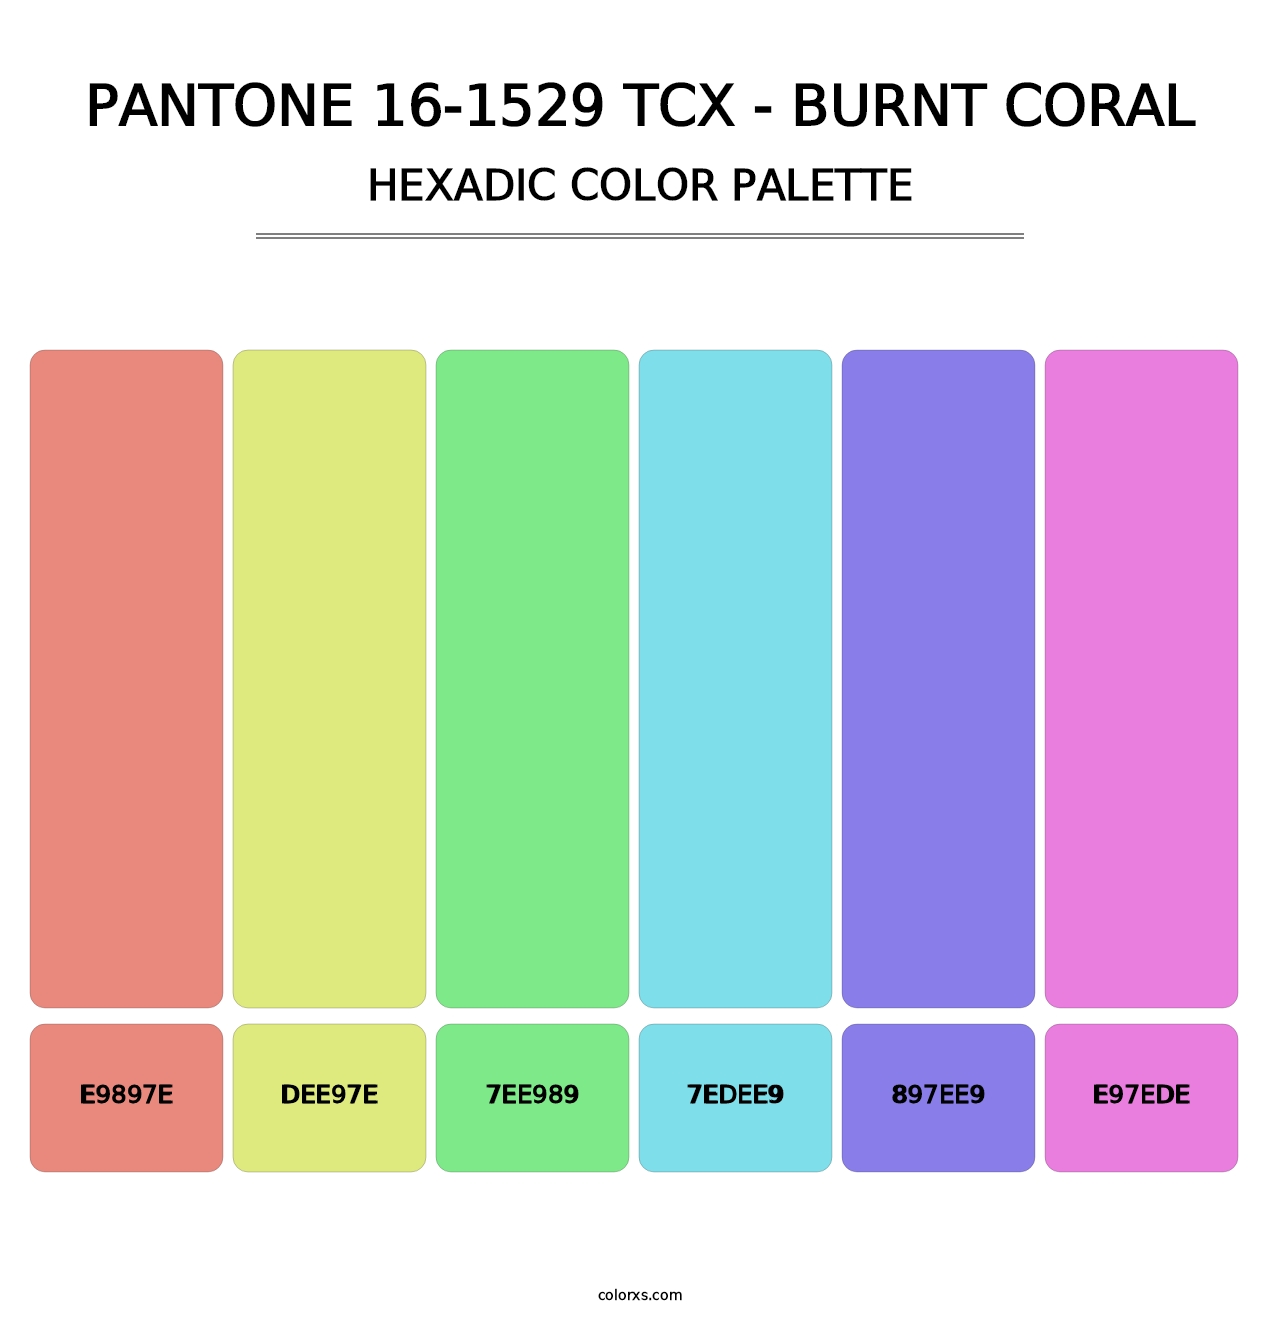 PANTONE 16-1529 TCX - Burnt Coral - Hexadic Color Palette